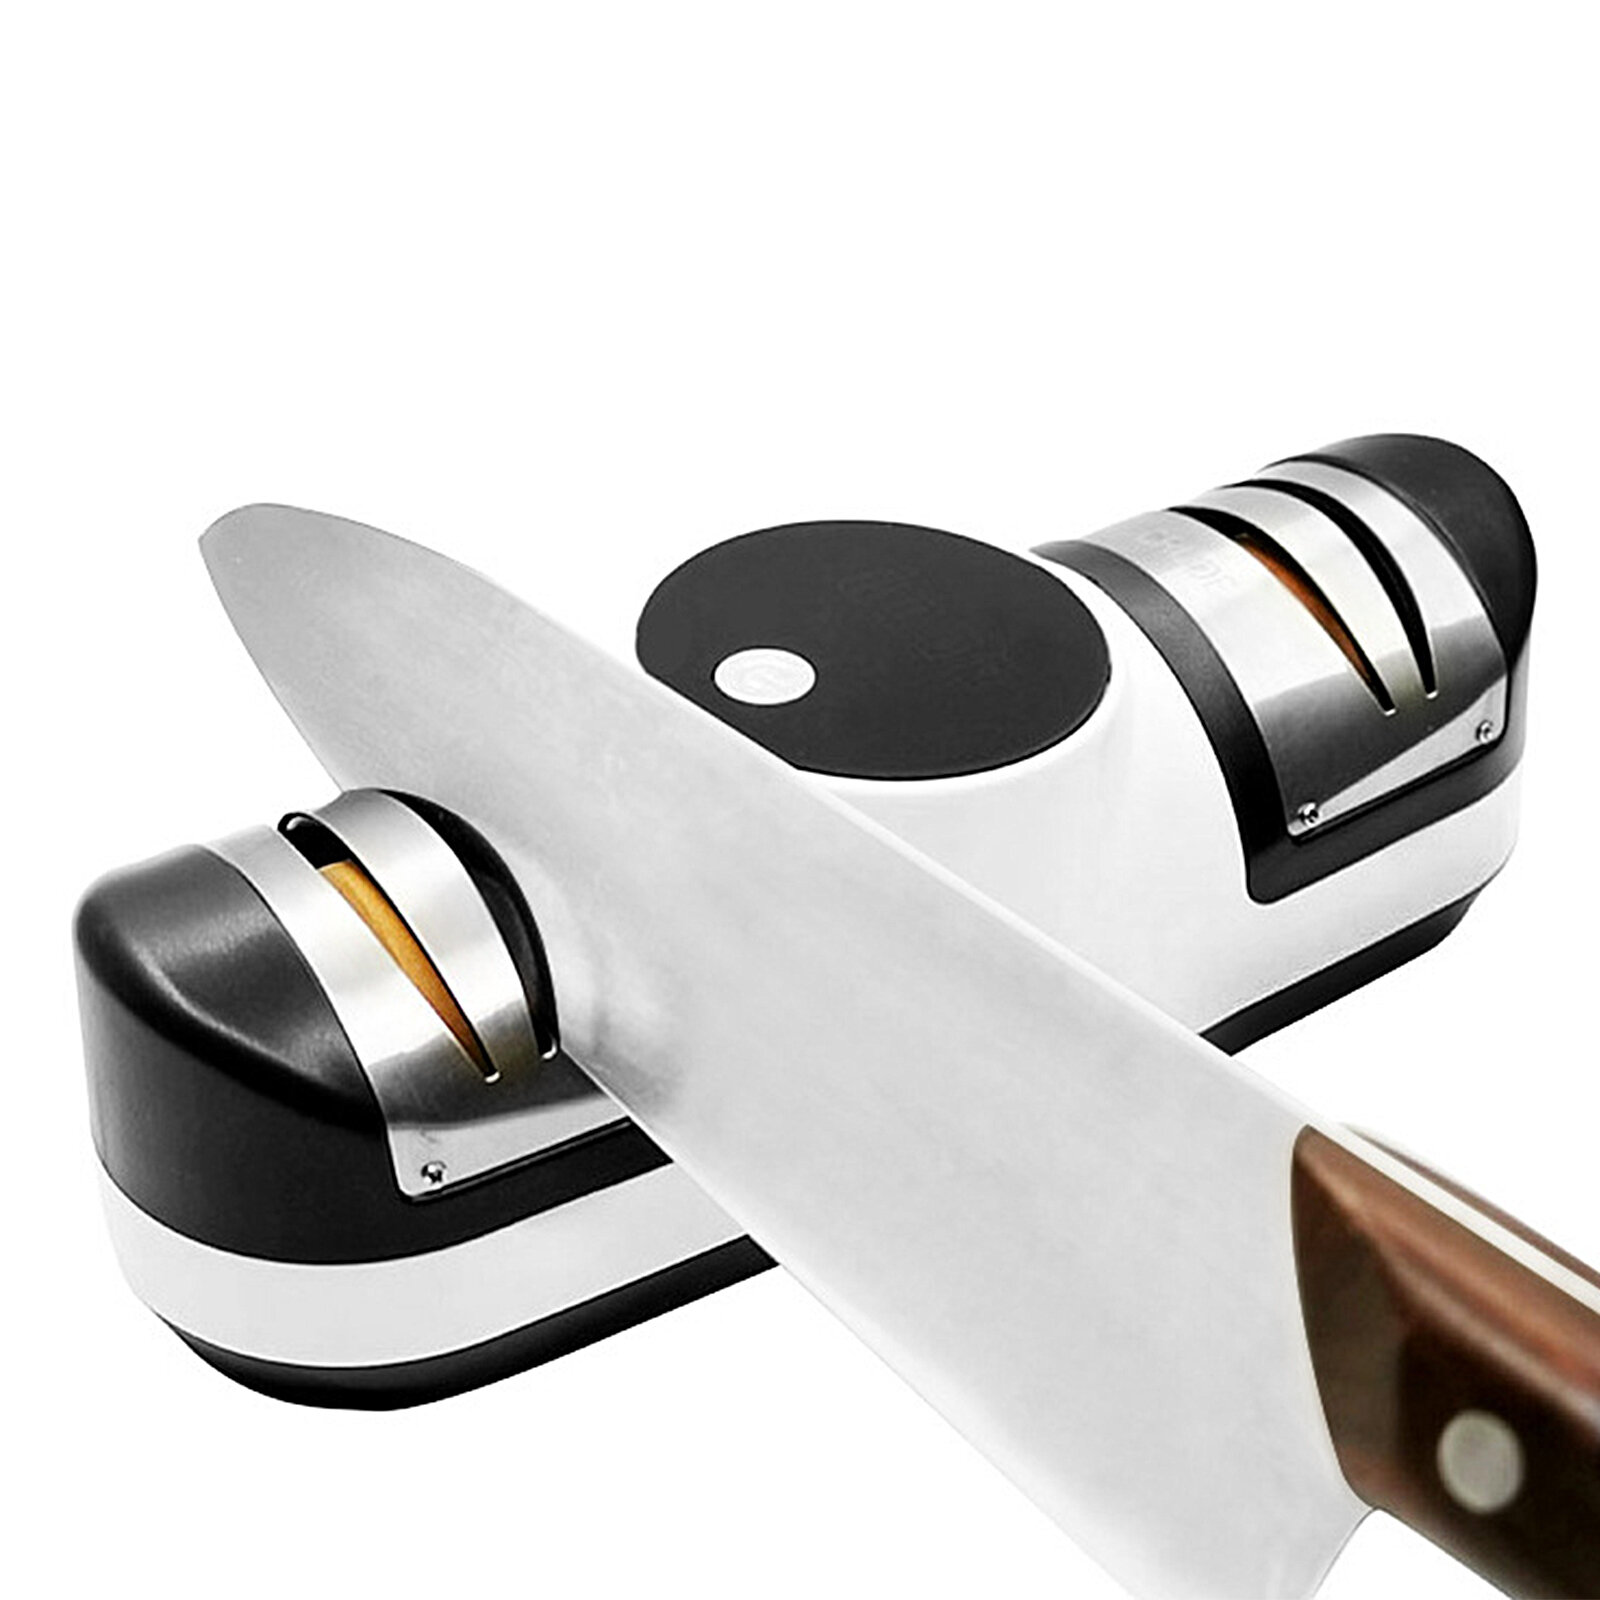 GooChef Electric Knife Sharpener - 2-Stage Sharpening & Polishing - US